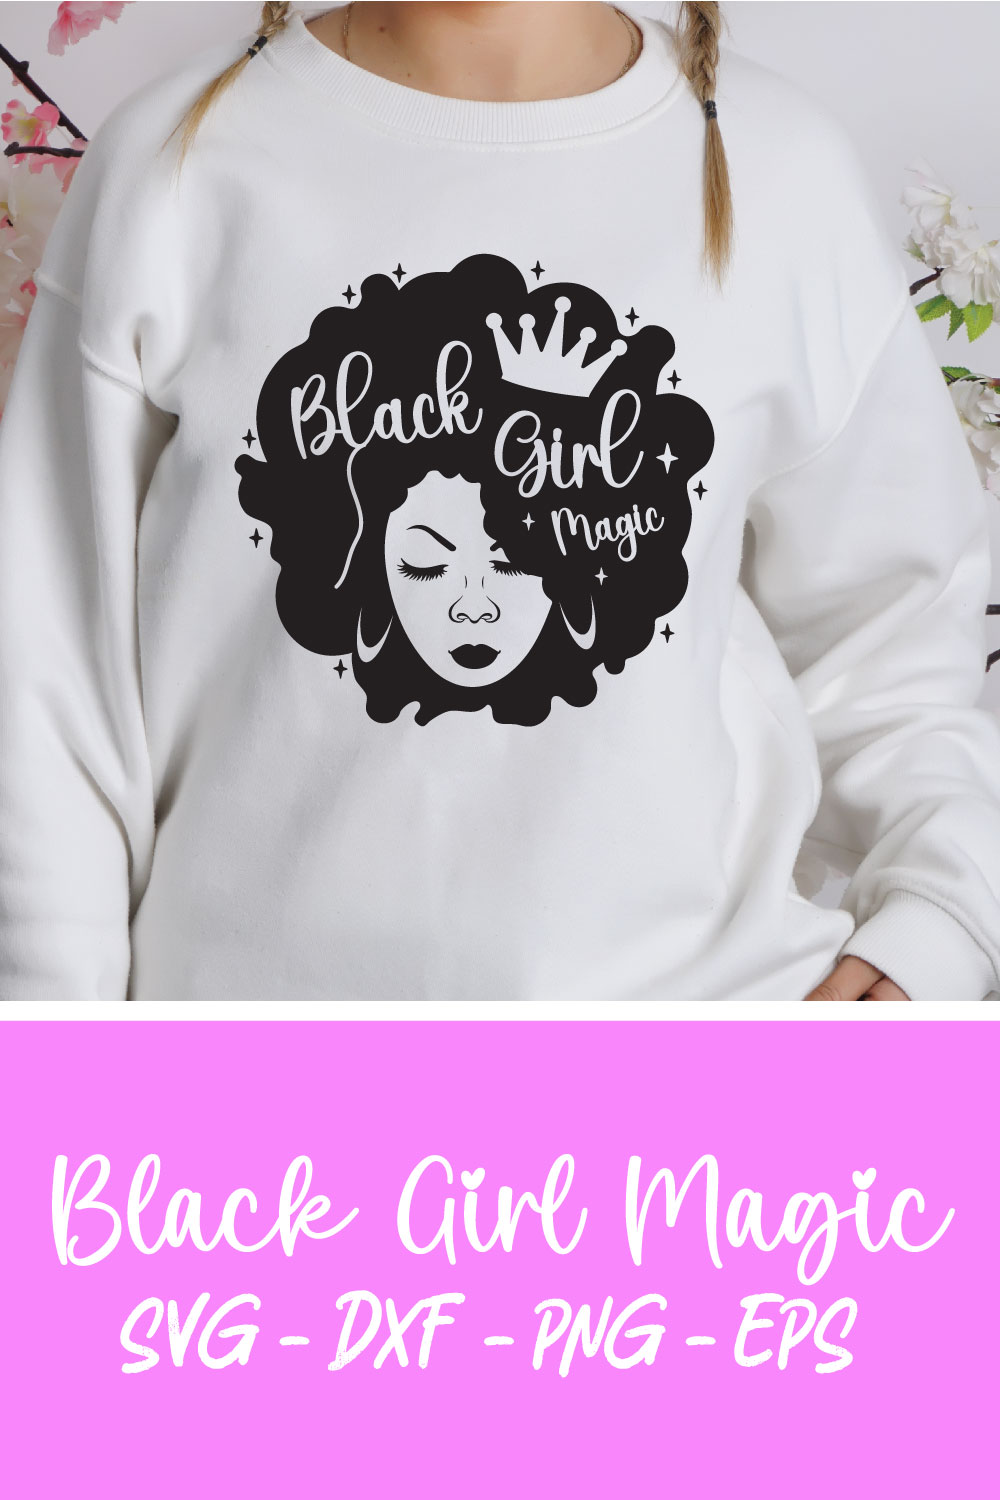 black girl magic svg pinterest preview image.